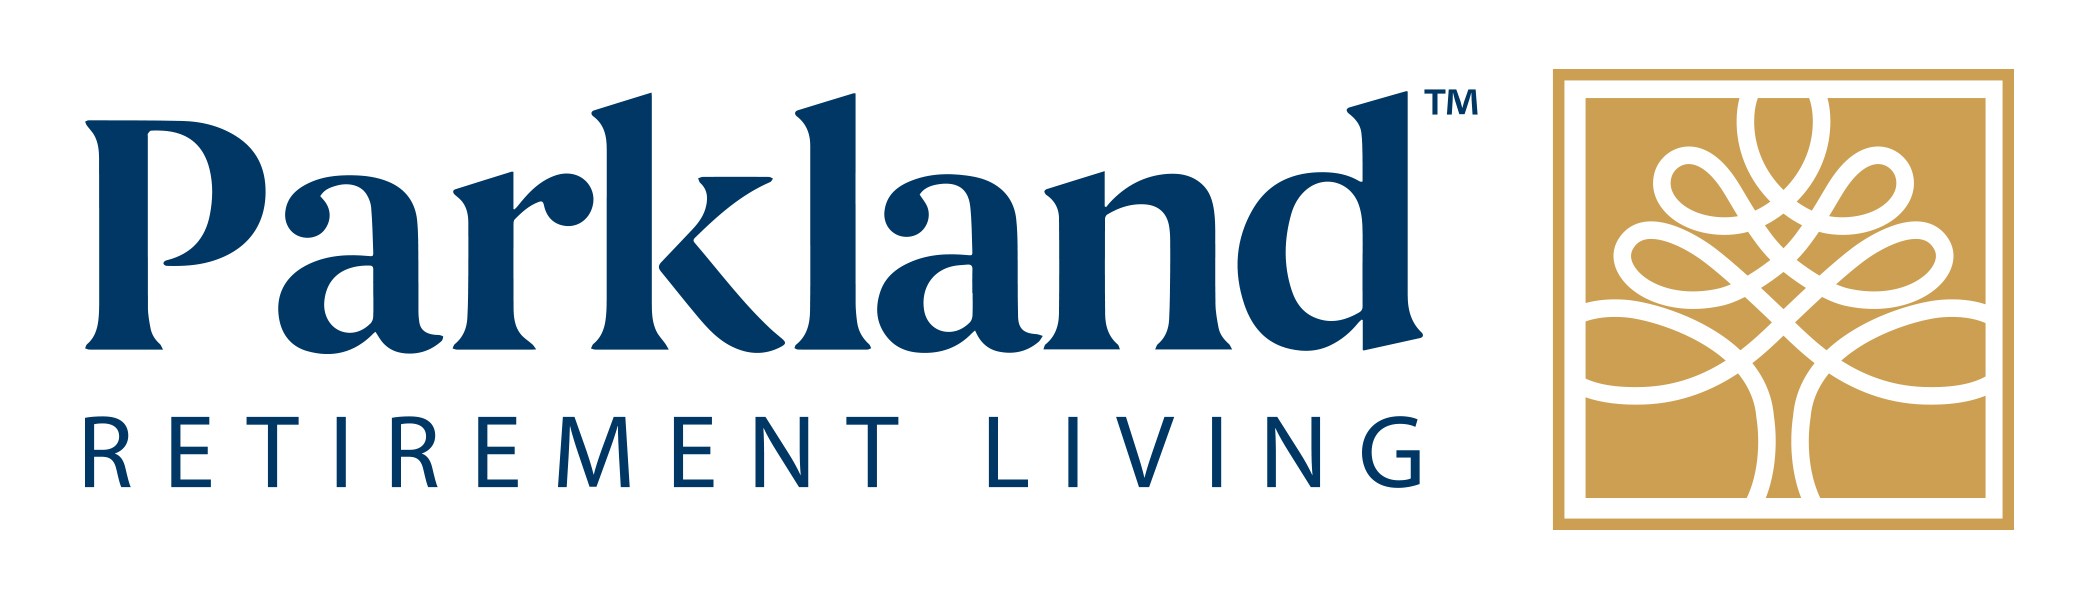 Parkland Retirement Living logo